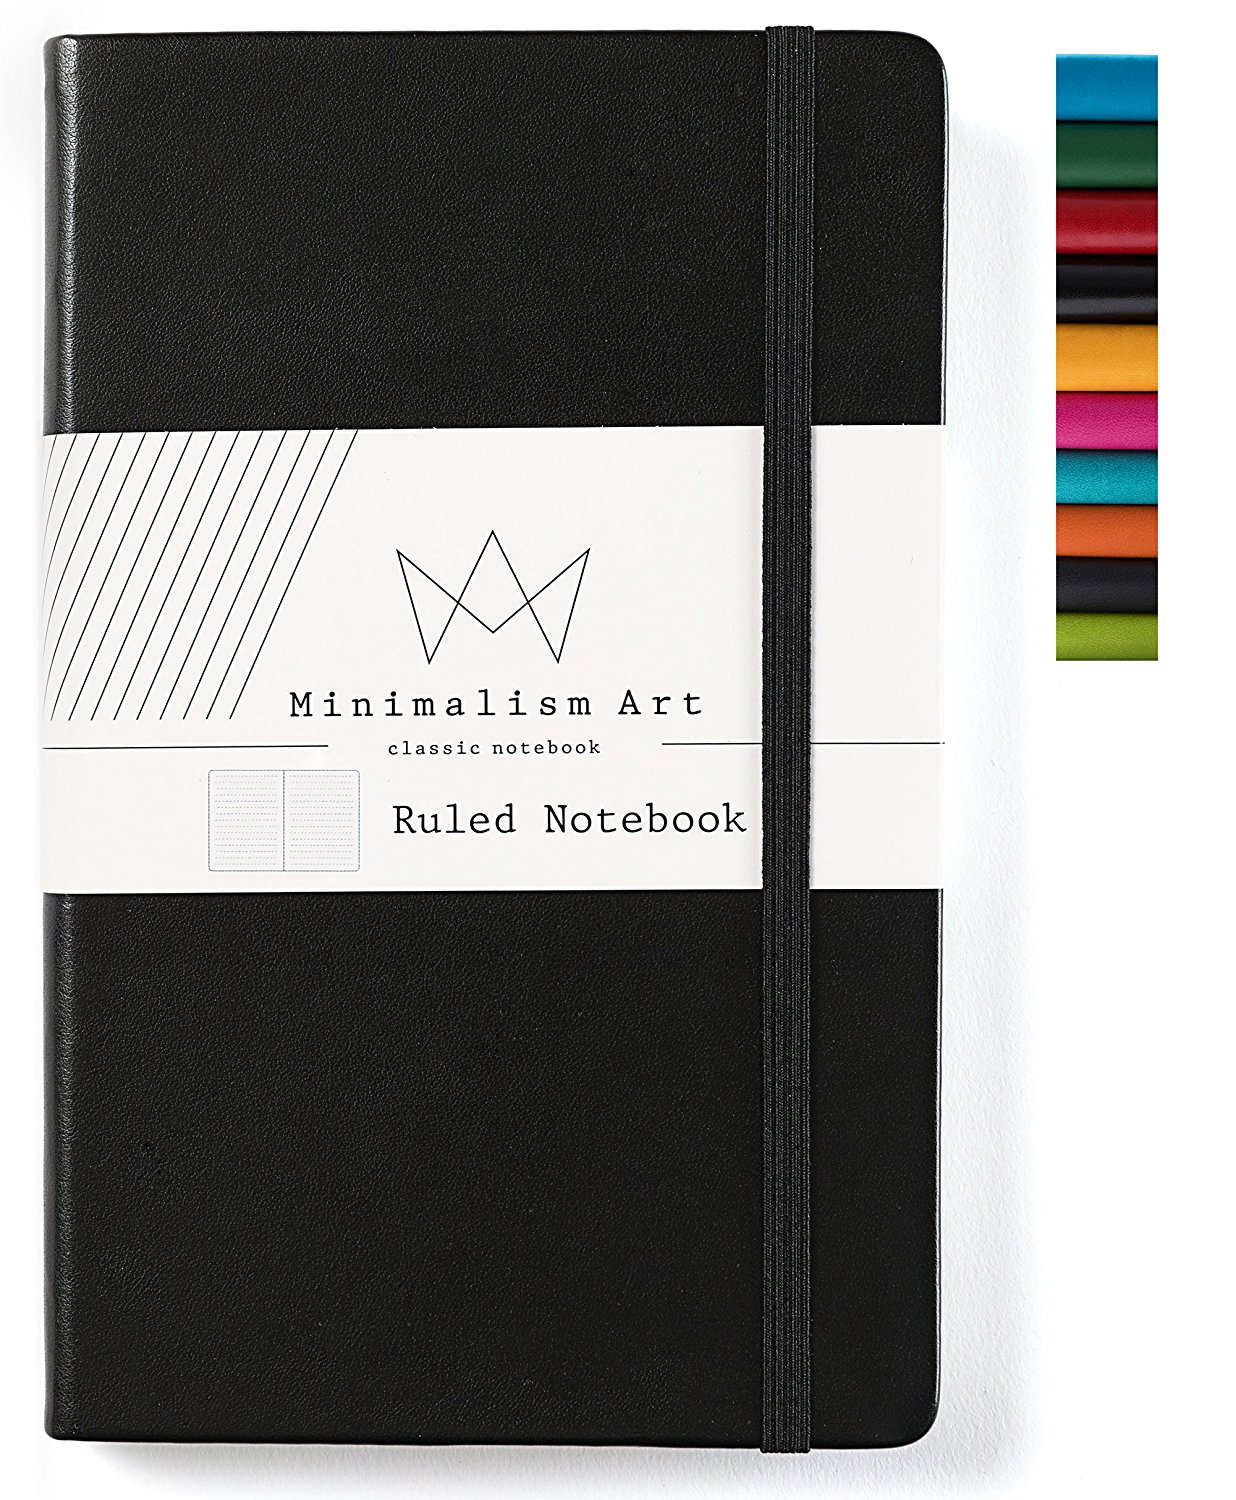 Ribbon Bookmark Classic Soft Cover Notebook Journal Plain, Black 176 Pages Medium Size Minimalism Art Fine PU Leather A5 5.8 x 8.3 San Francisco Premium Thick Paper 100gsm 